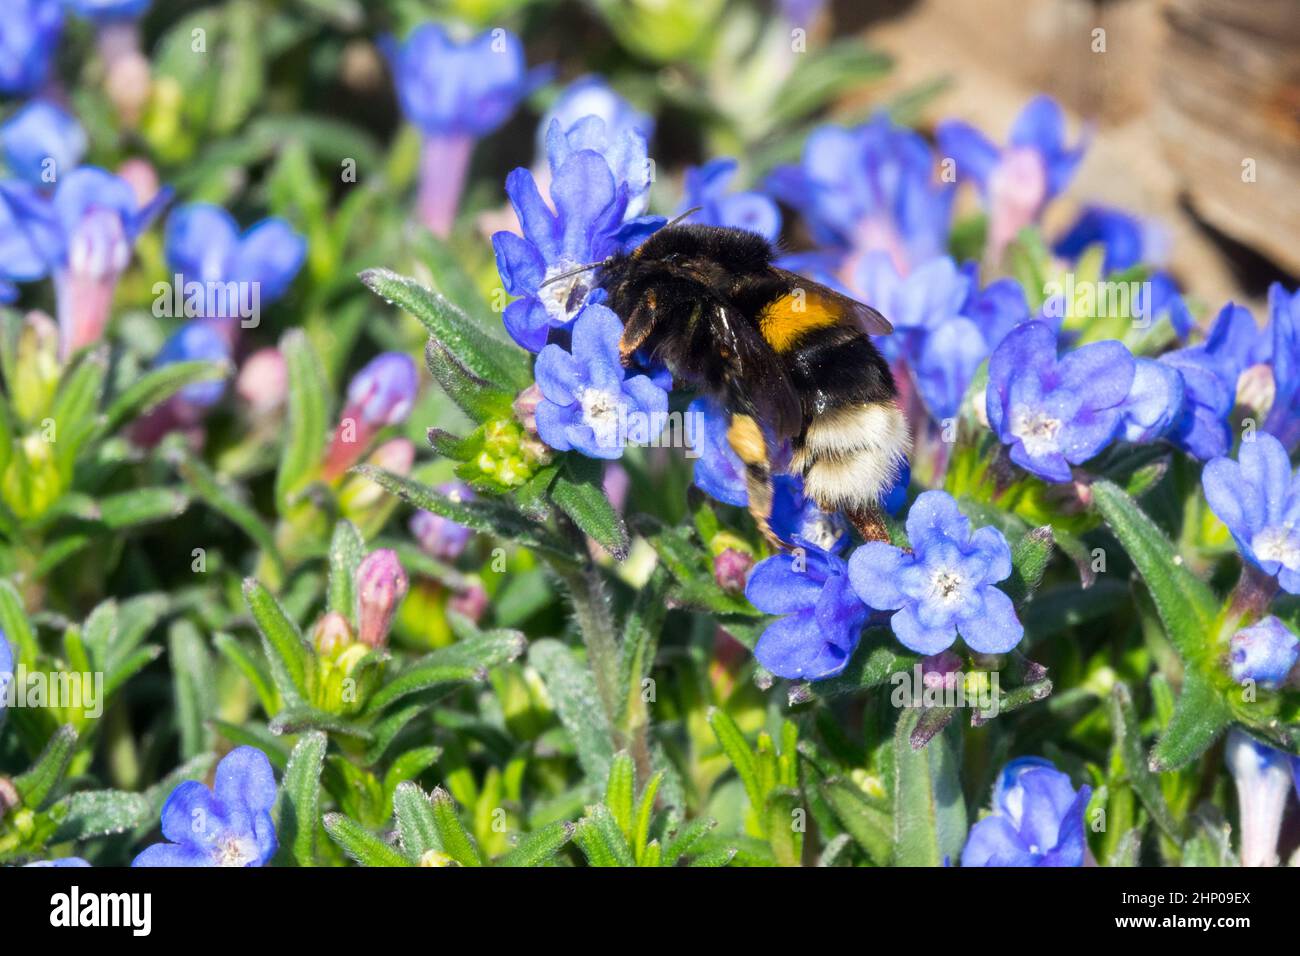 Bombus terrestris,Buff-tailed bumblebee,Bumble bee on flower Lithodora diffusa Heavenly Blue Stock Photo